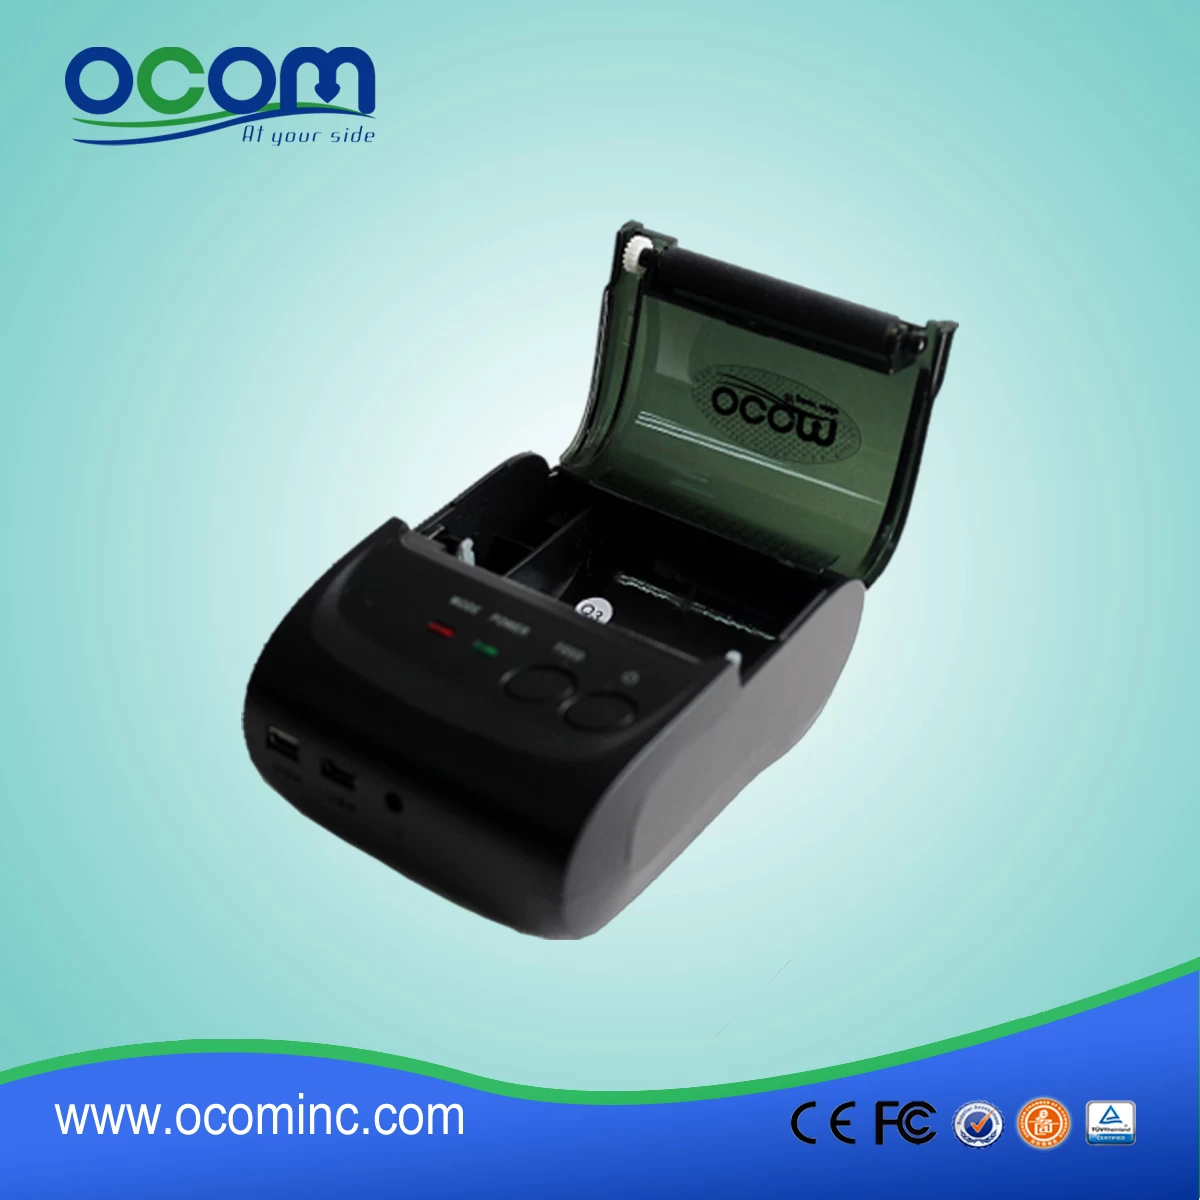 58mm Android Portable USB Bluetooth Thermal Printer--OCPP-M05